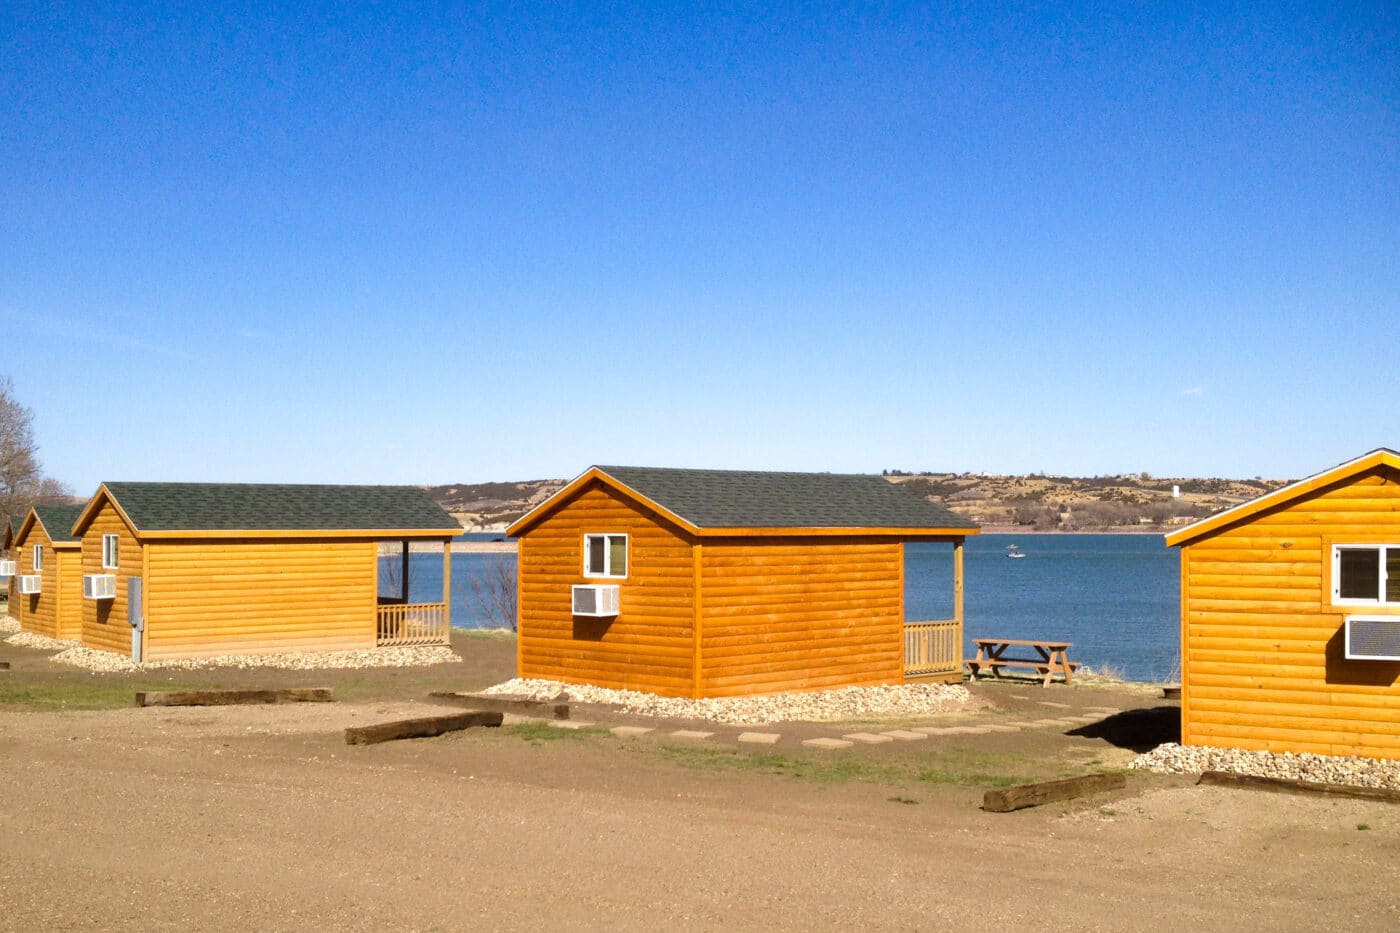 Several a-frame log side prefab cabins by lake